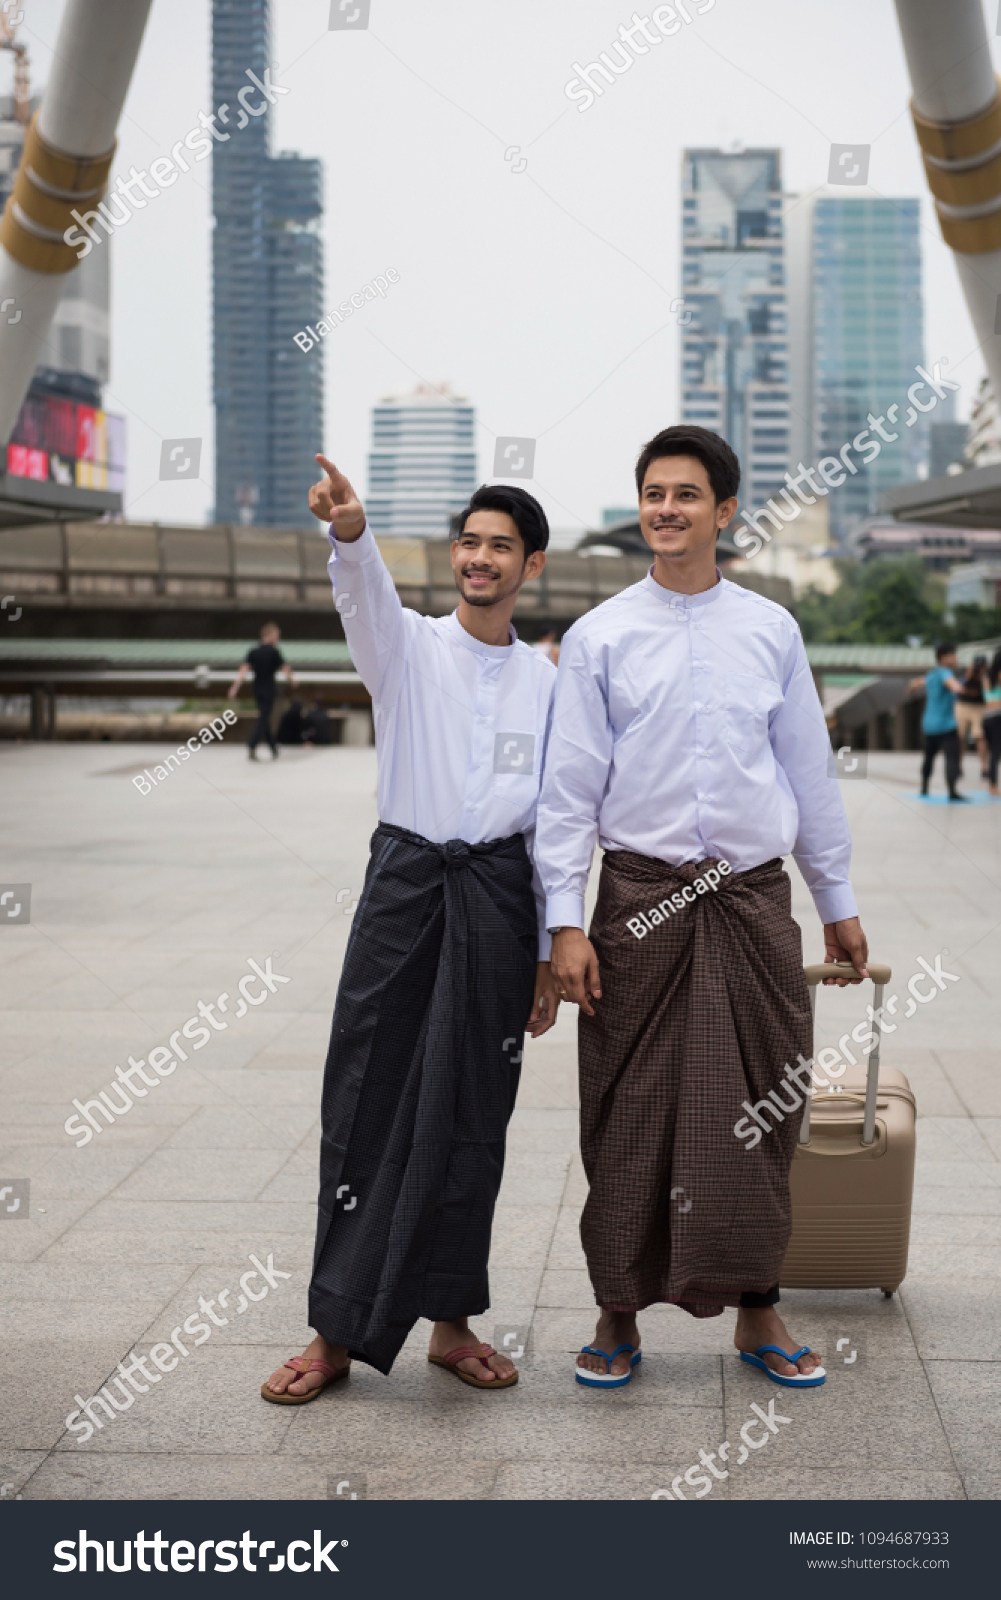 47+ Myanmar People Dress Images